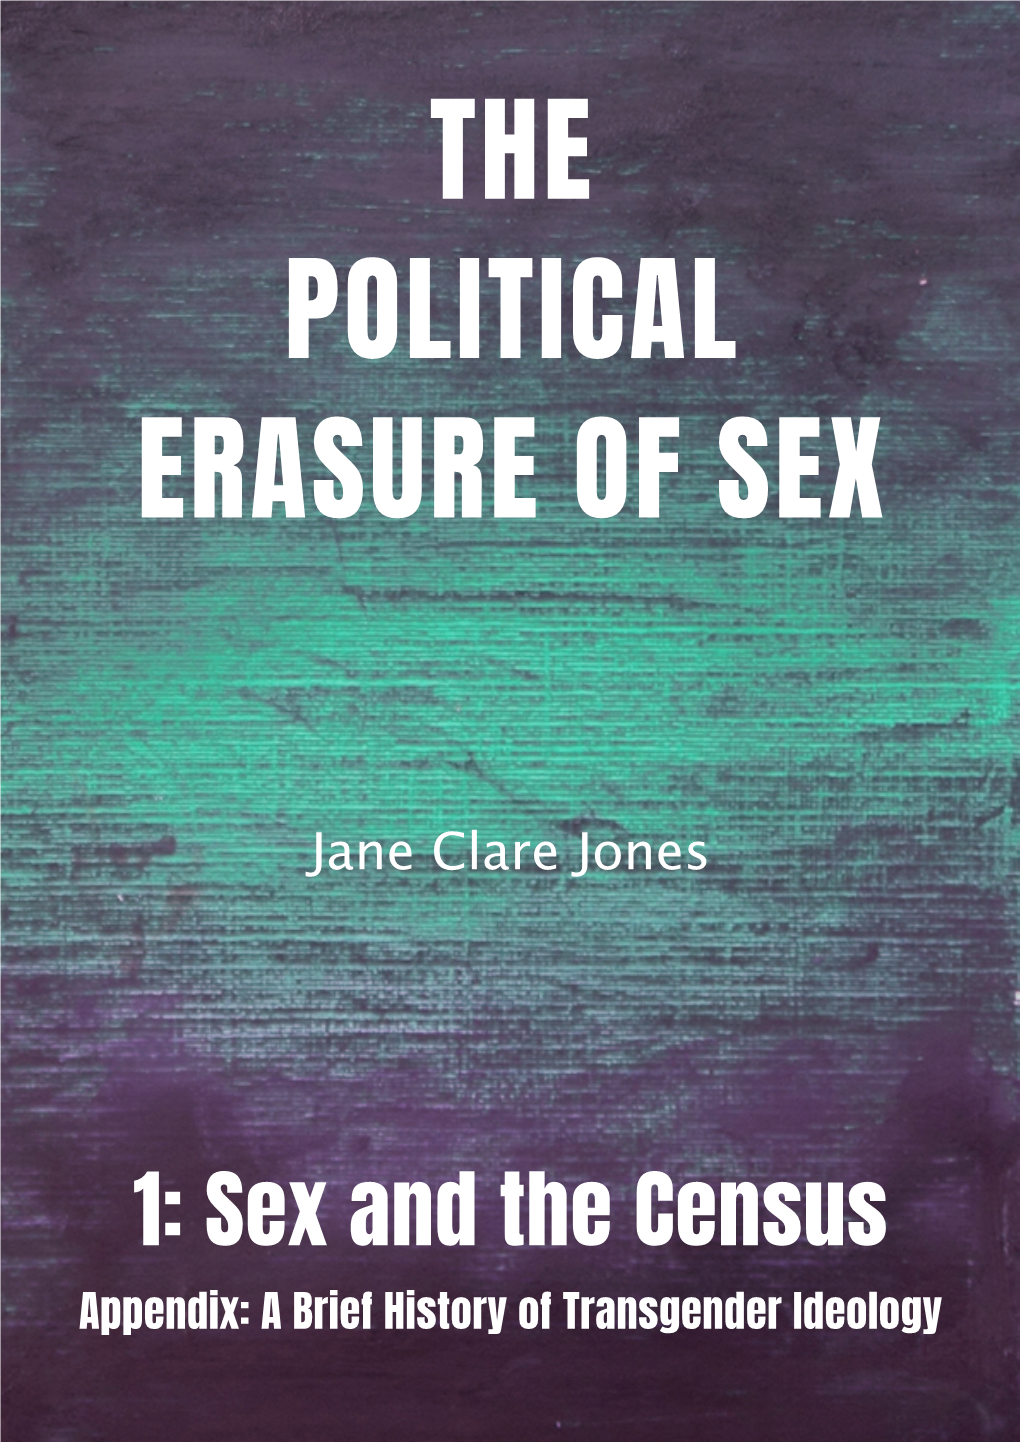 Jane Clare Jones